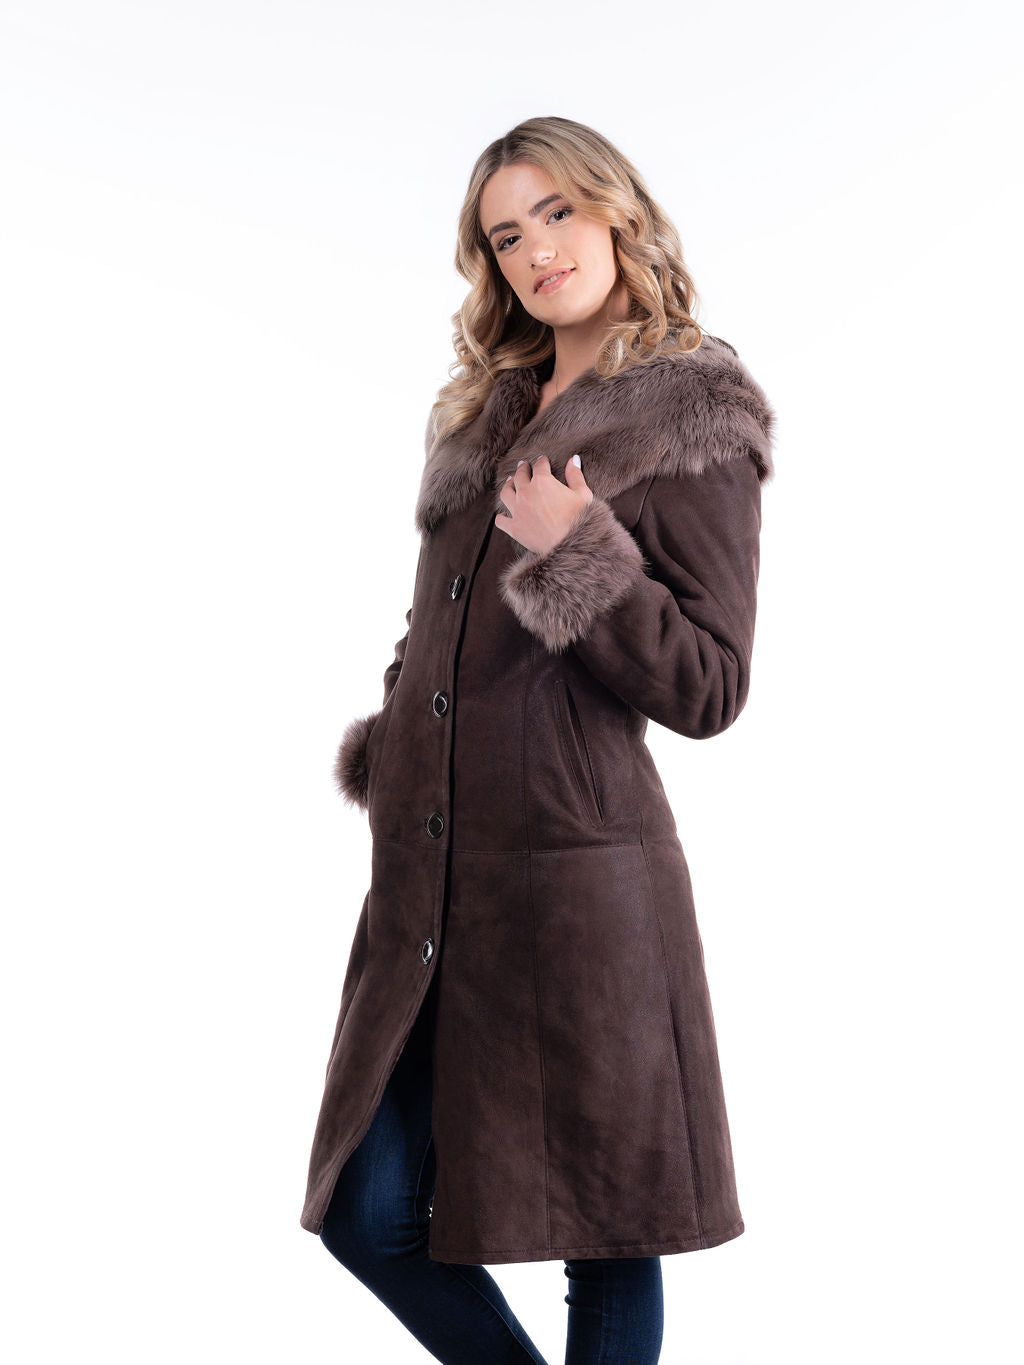 Ewka Hooded Sheepskin Coat in Dark Brown